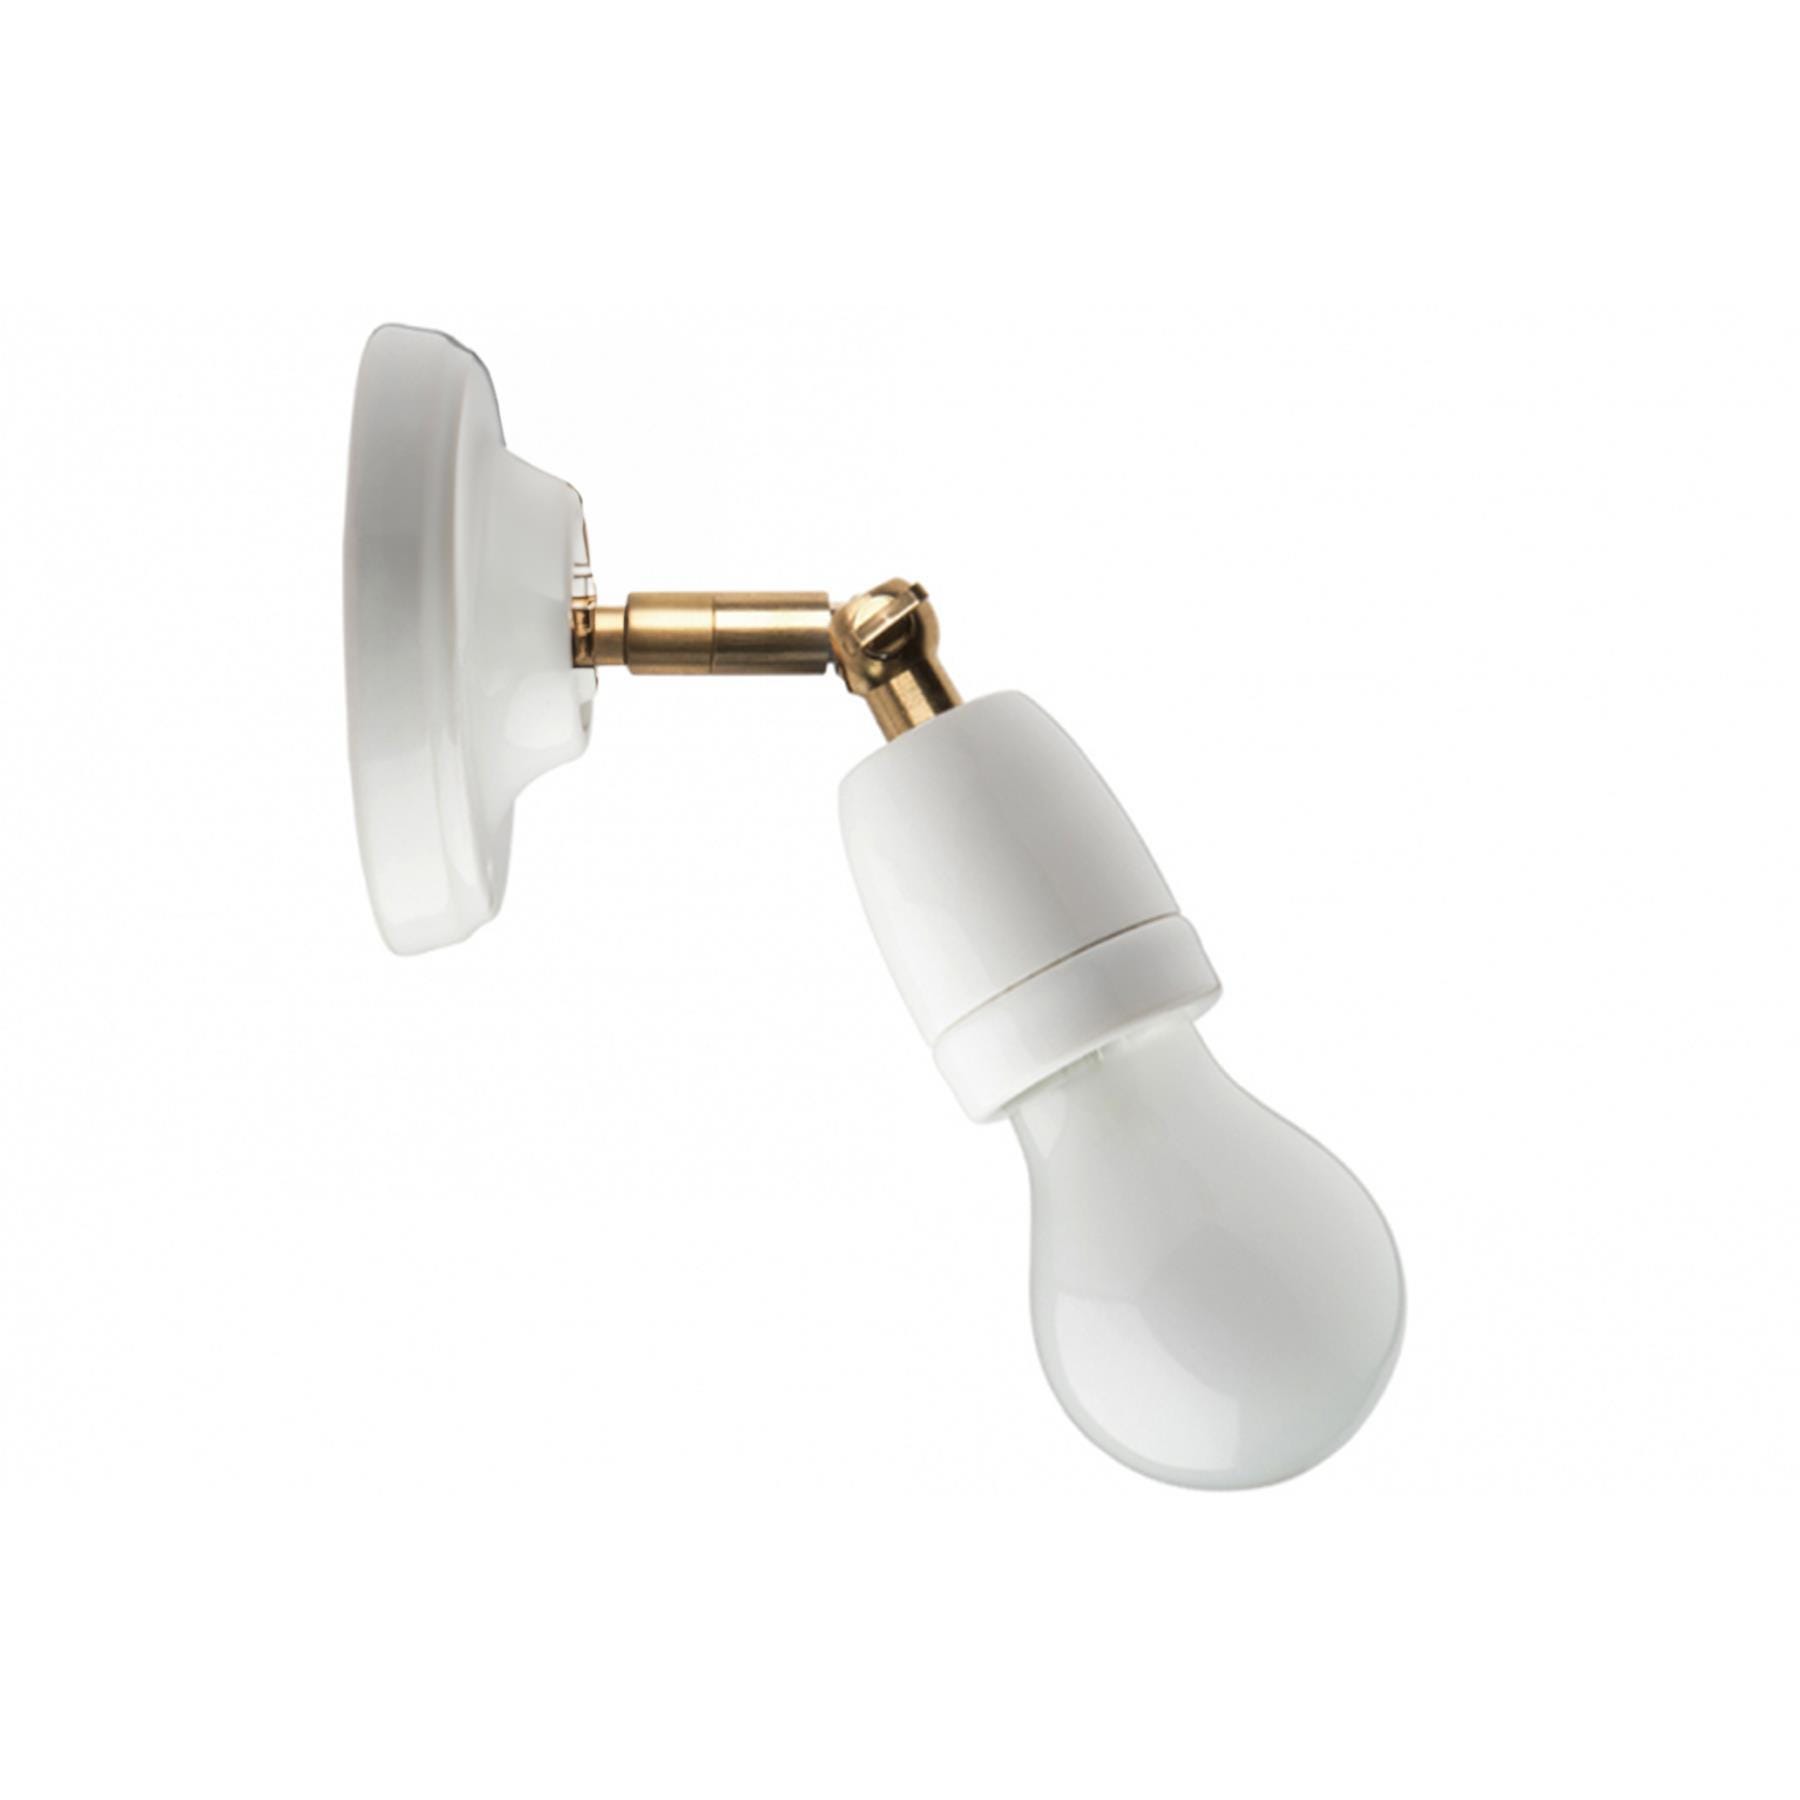 Zangra Pure Porcelain Adjustable Wall Light White And Brass Wall Lighting